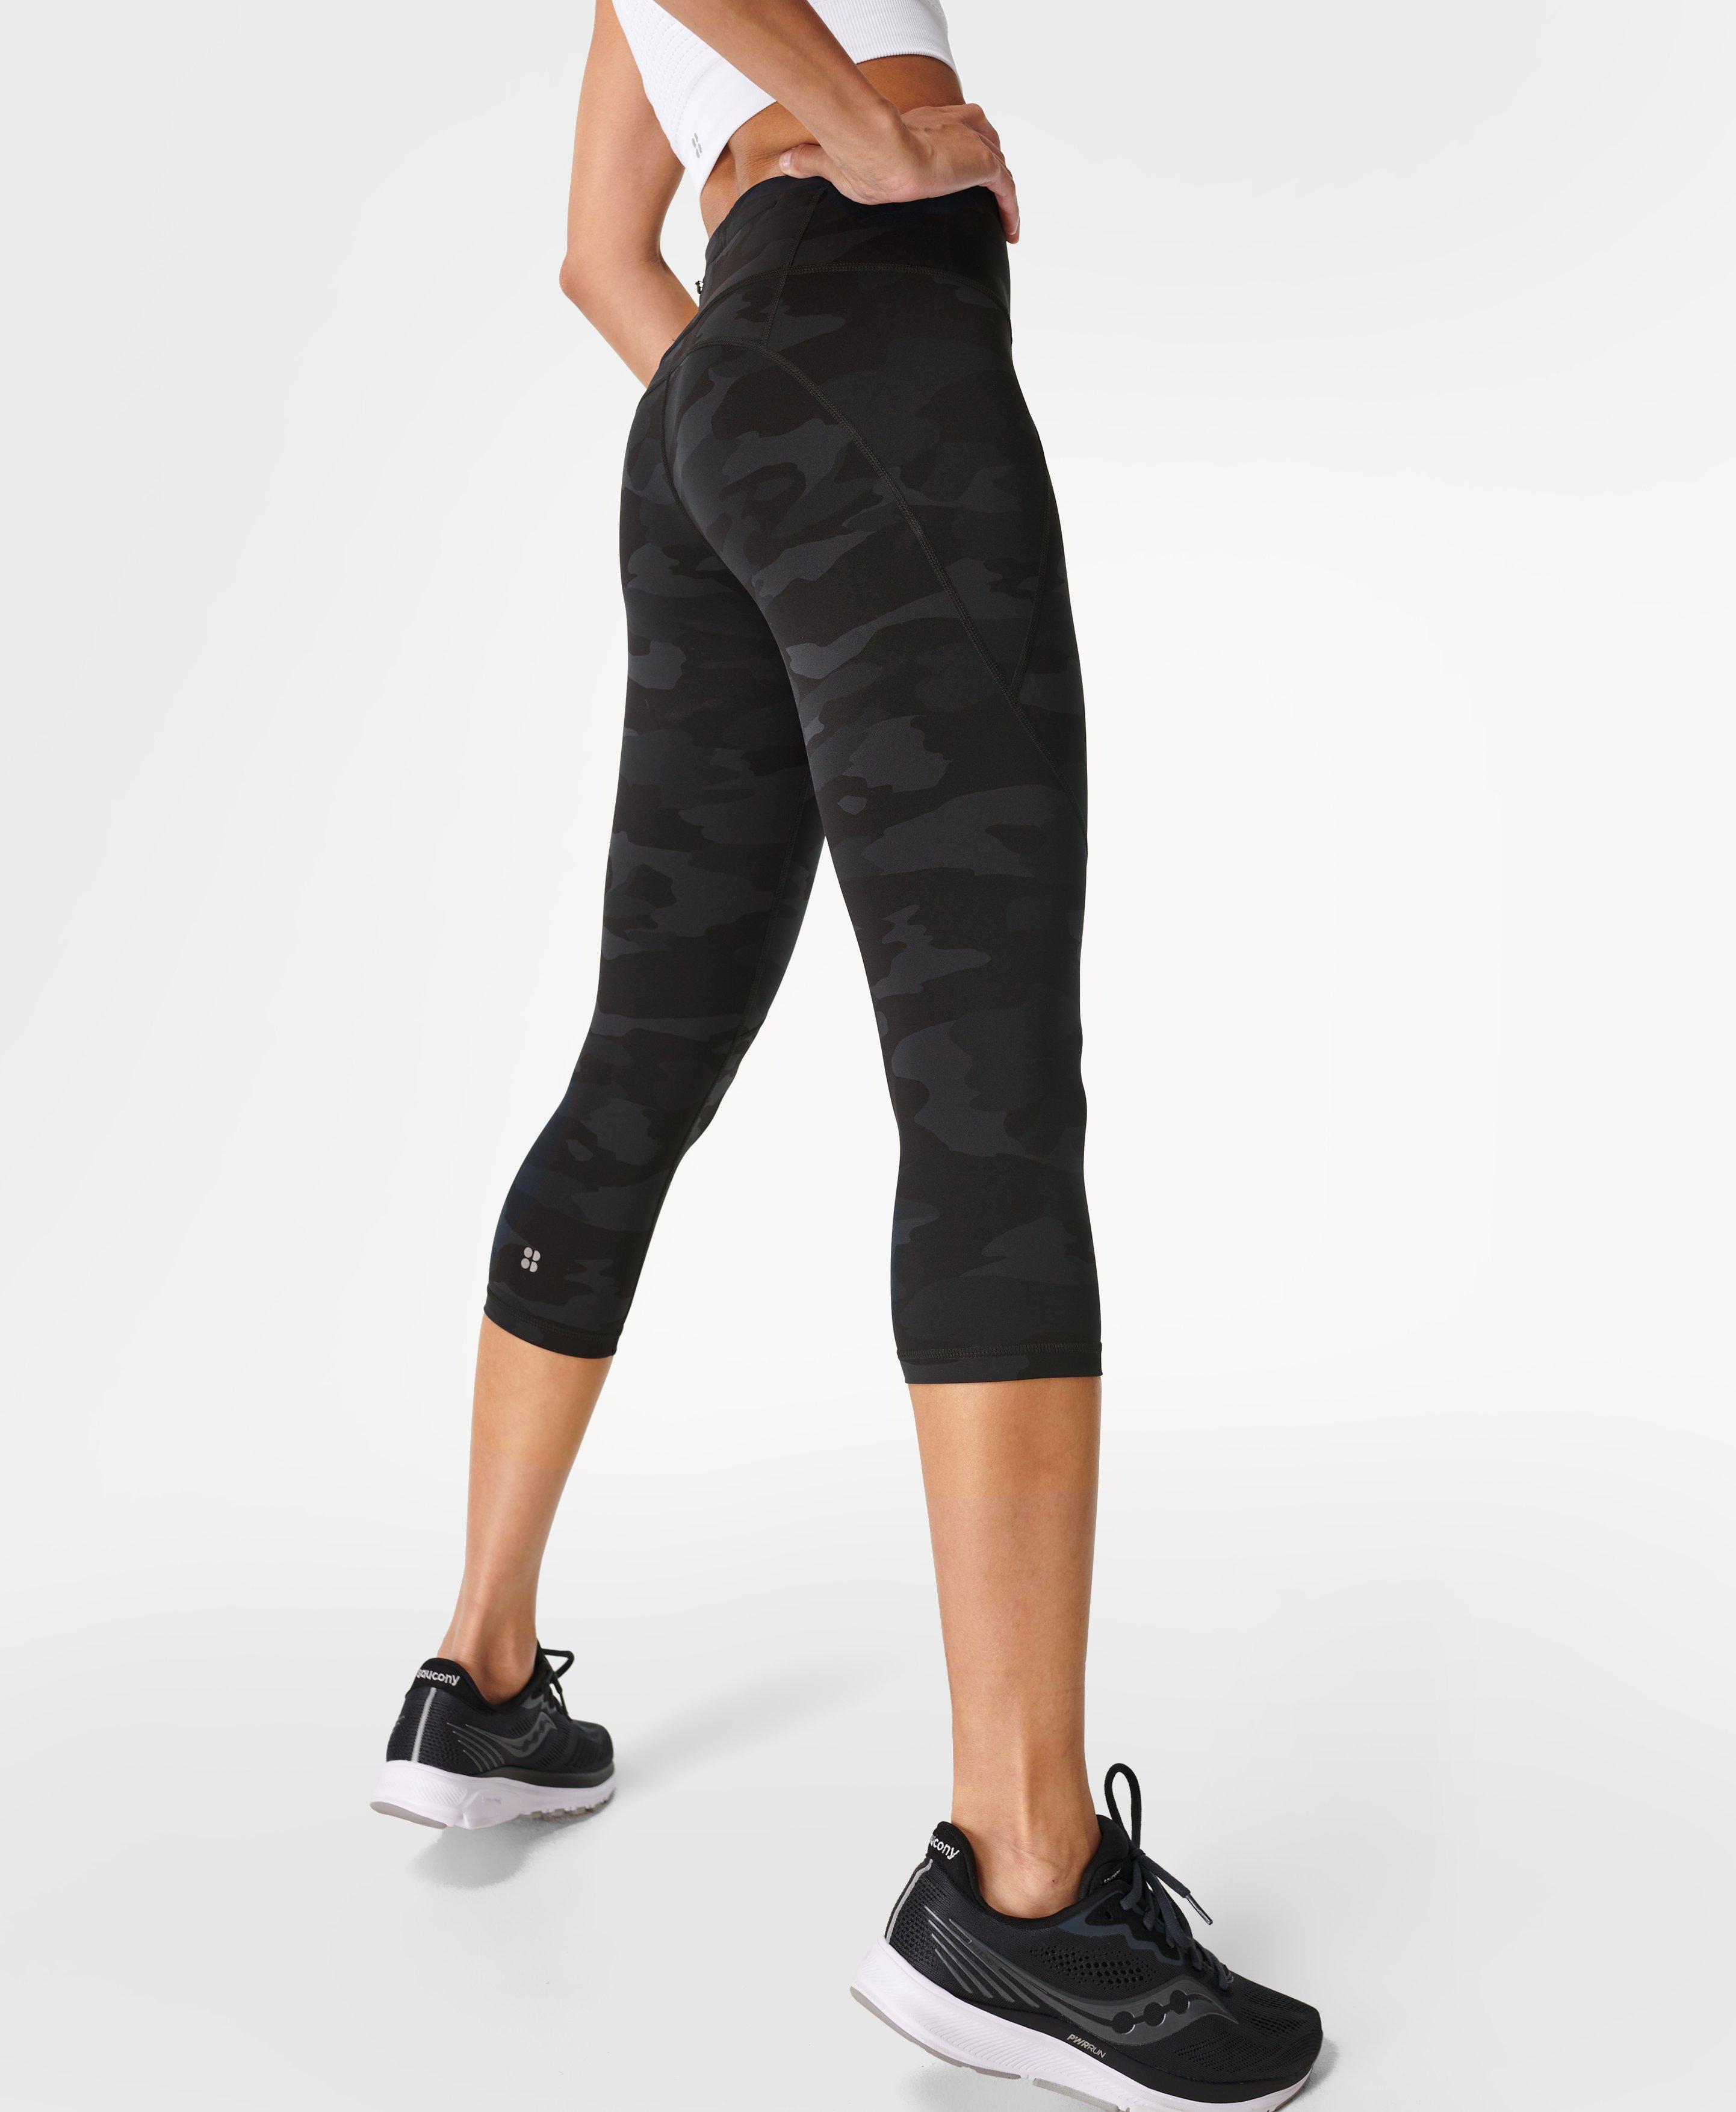 Power Cropped Gym Leggings - Ultra Black Camo Print, Women's Leggings